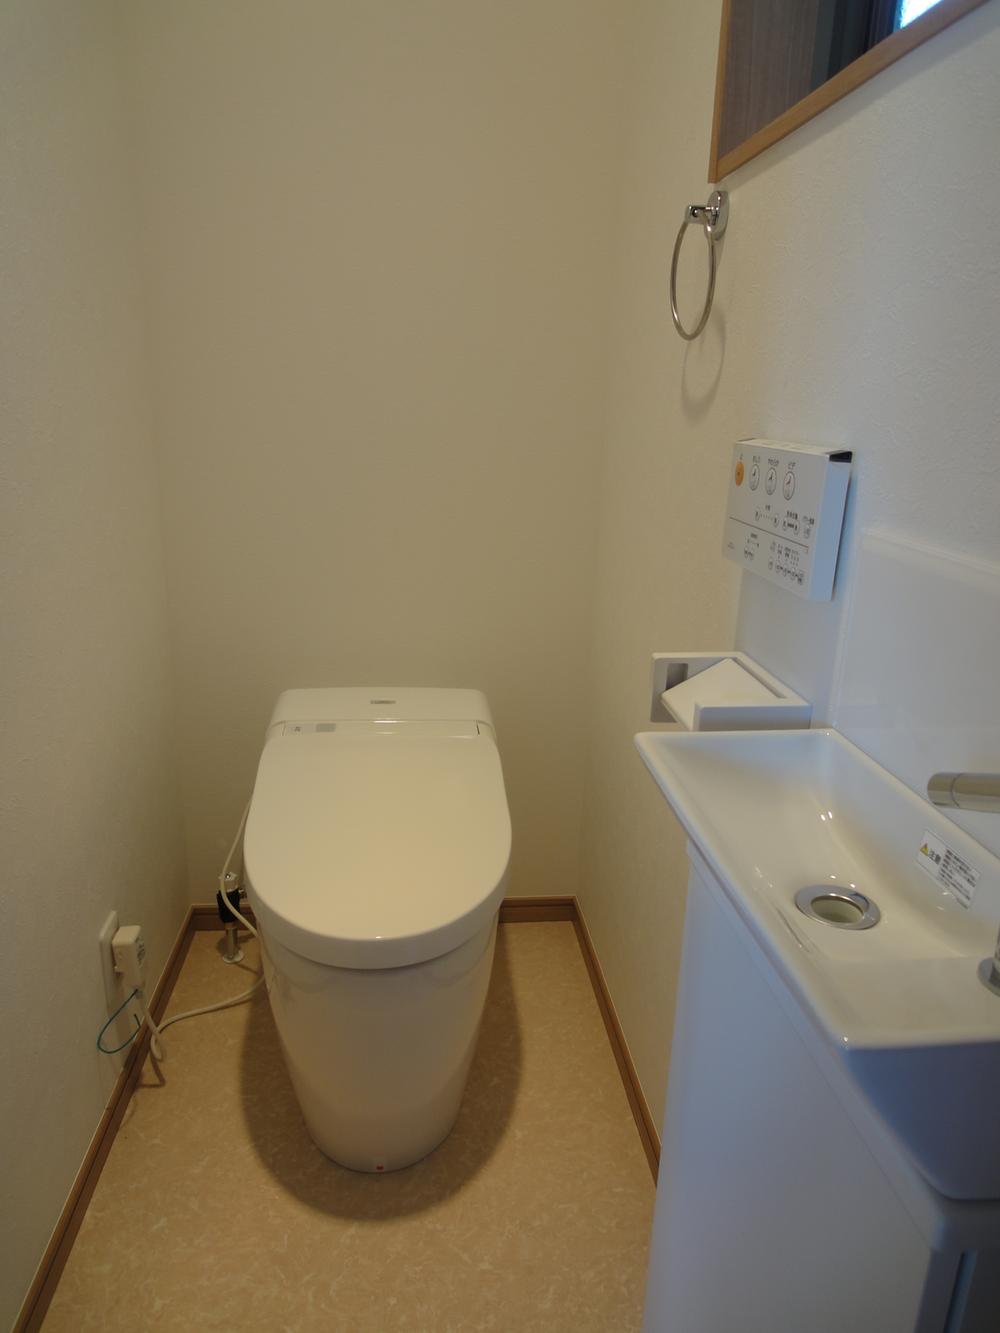 Toilet. Stylish toilet tank-less